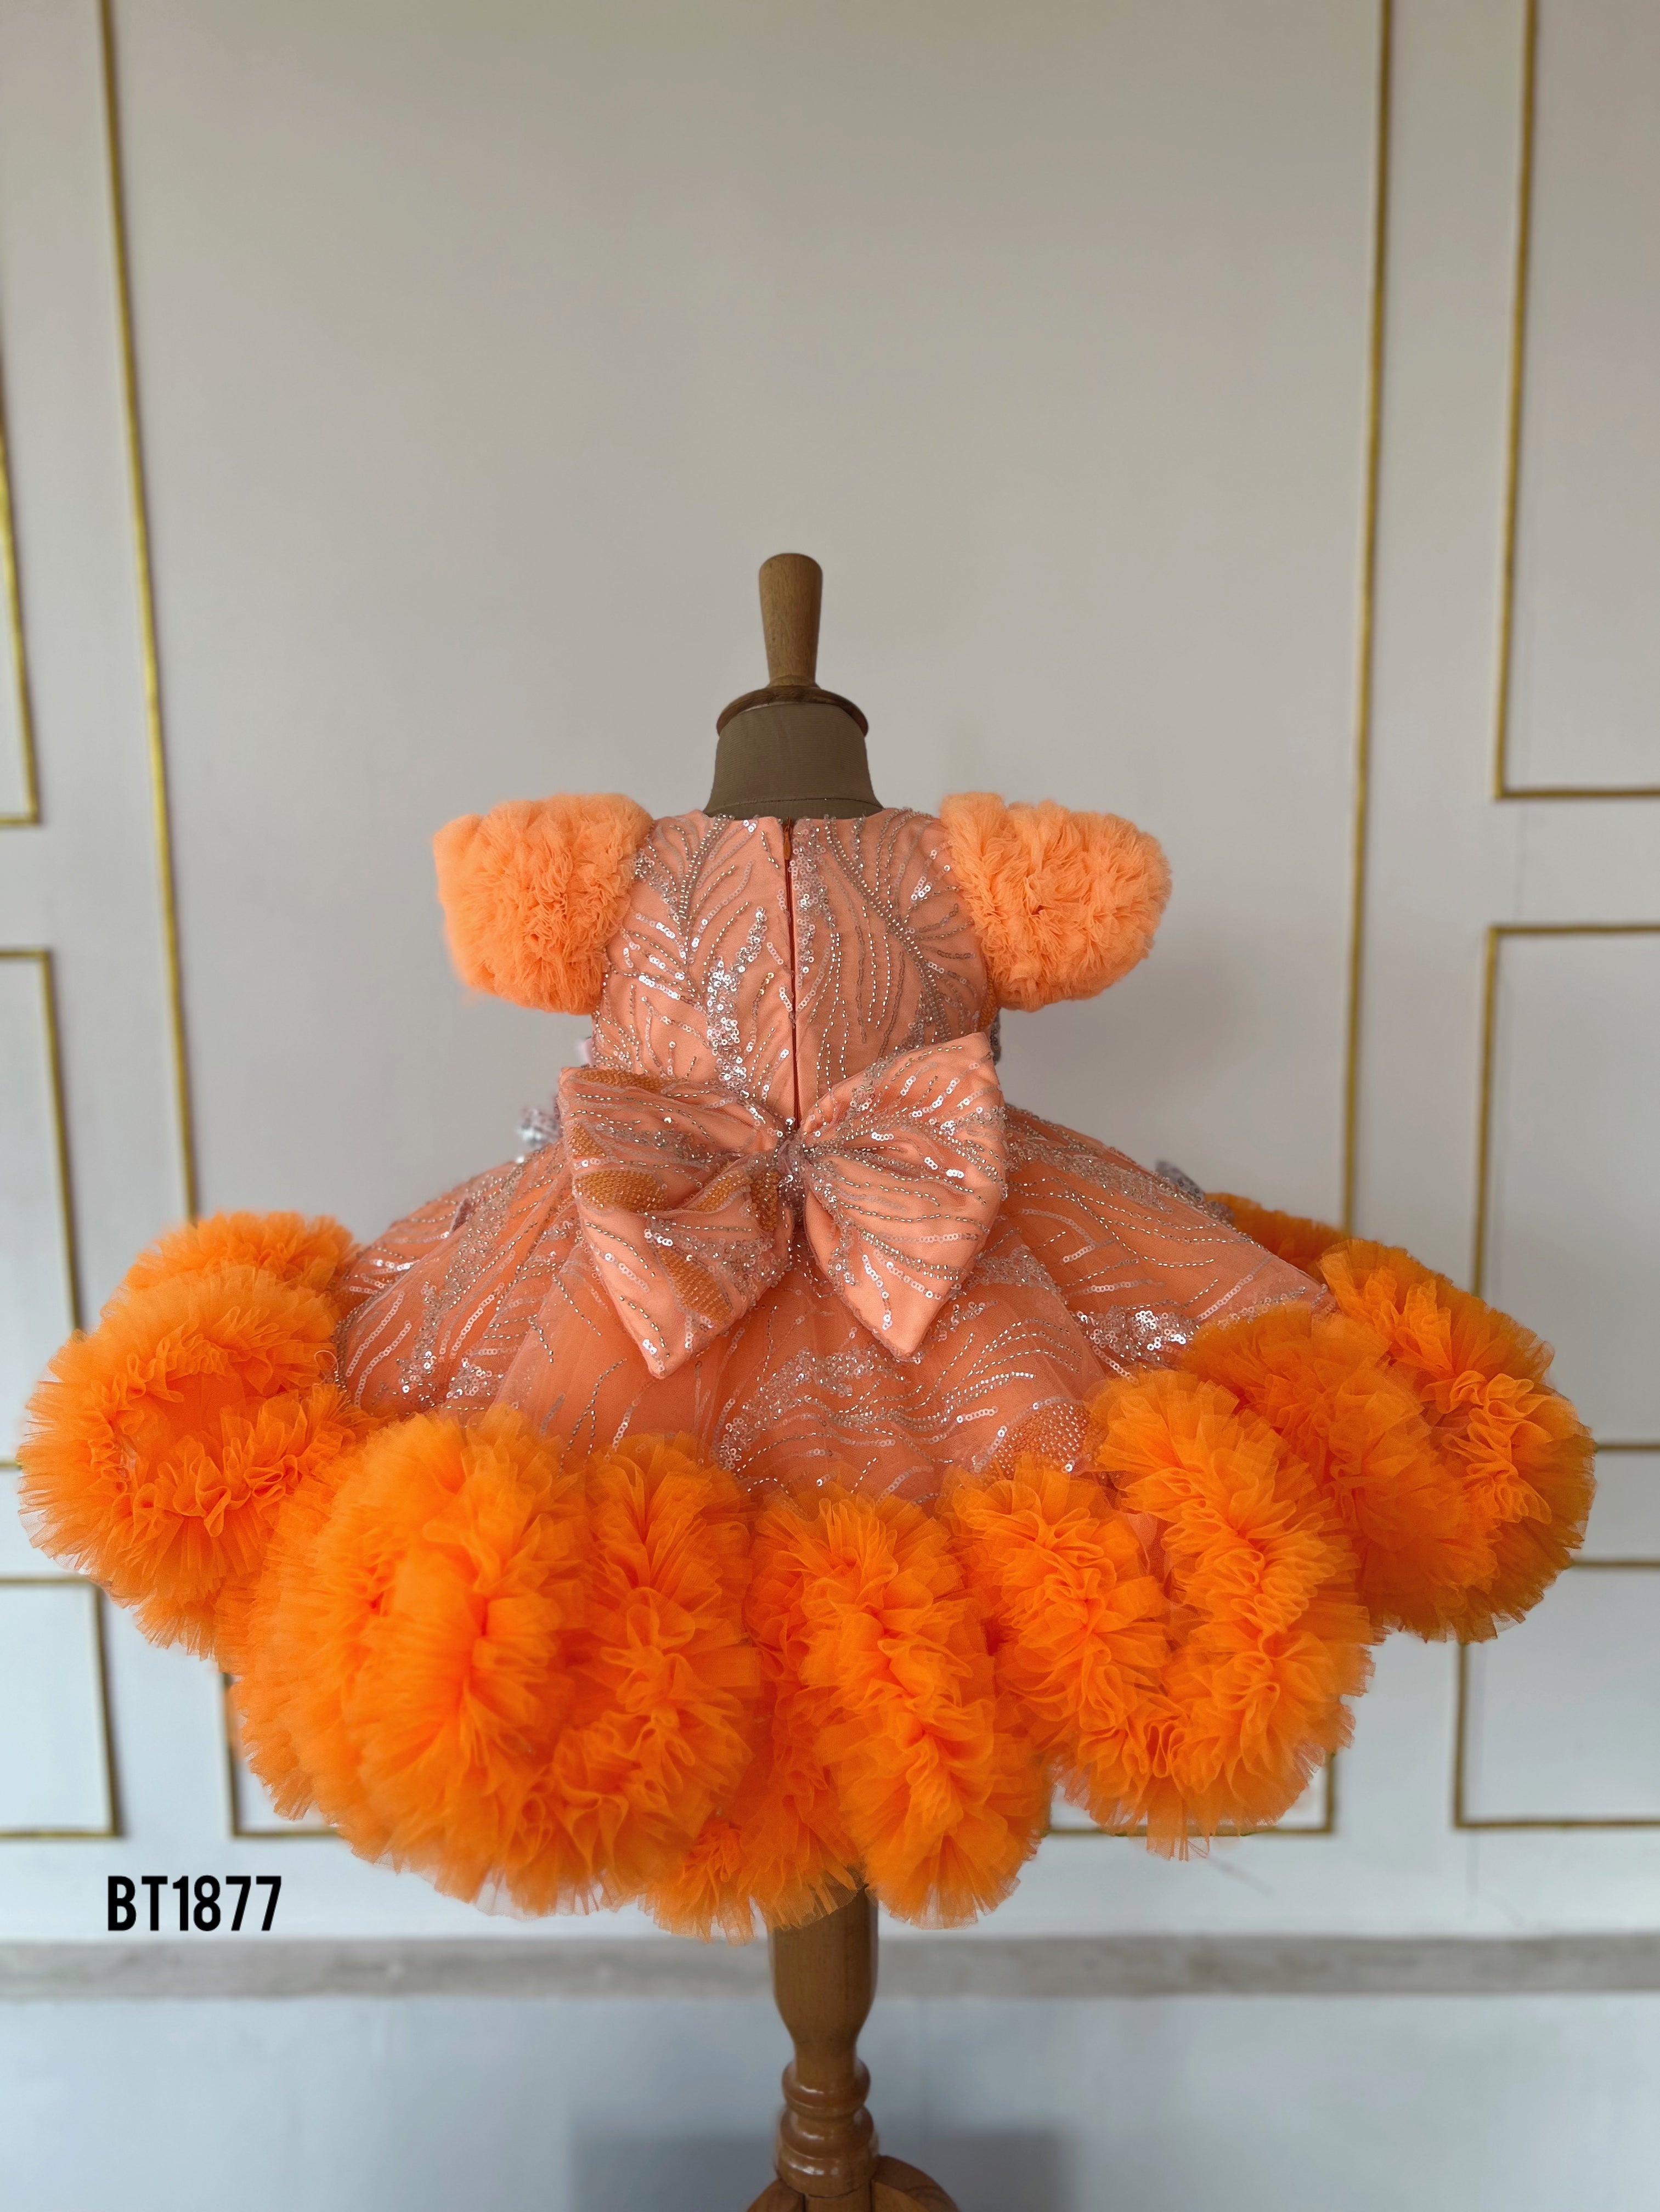 BT1877 Sunset Charm - Fluffy Orange Party Dress